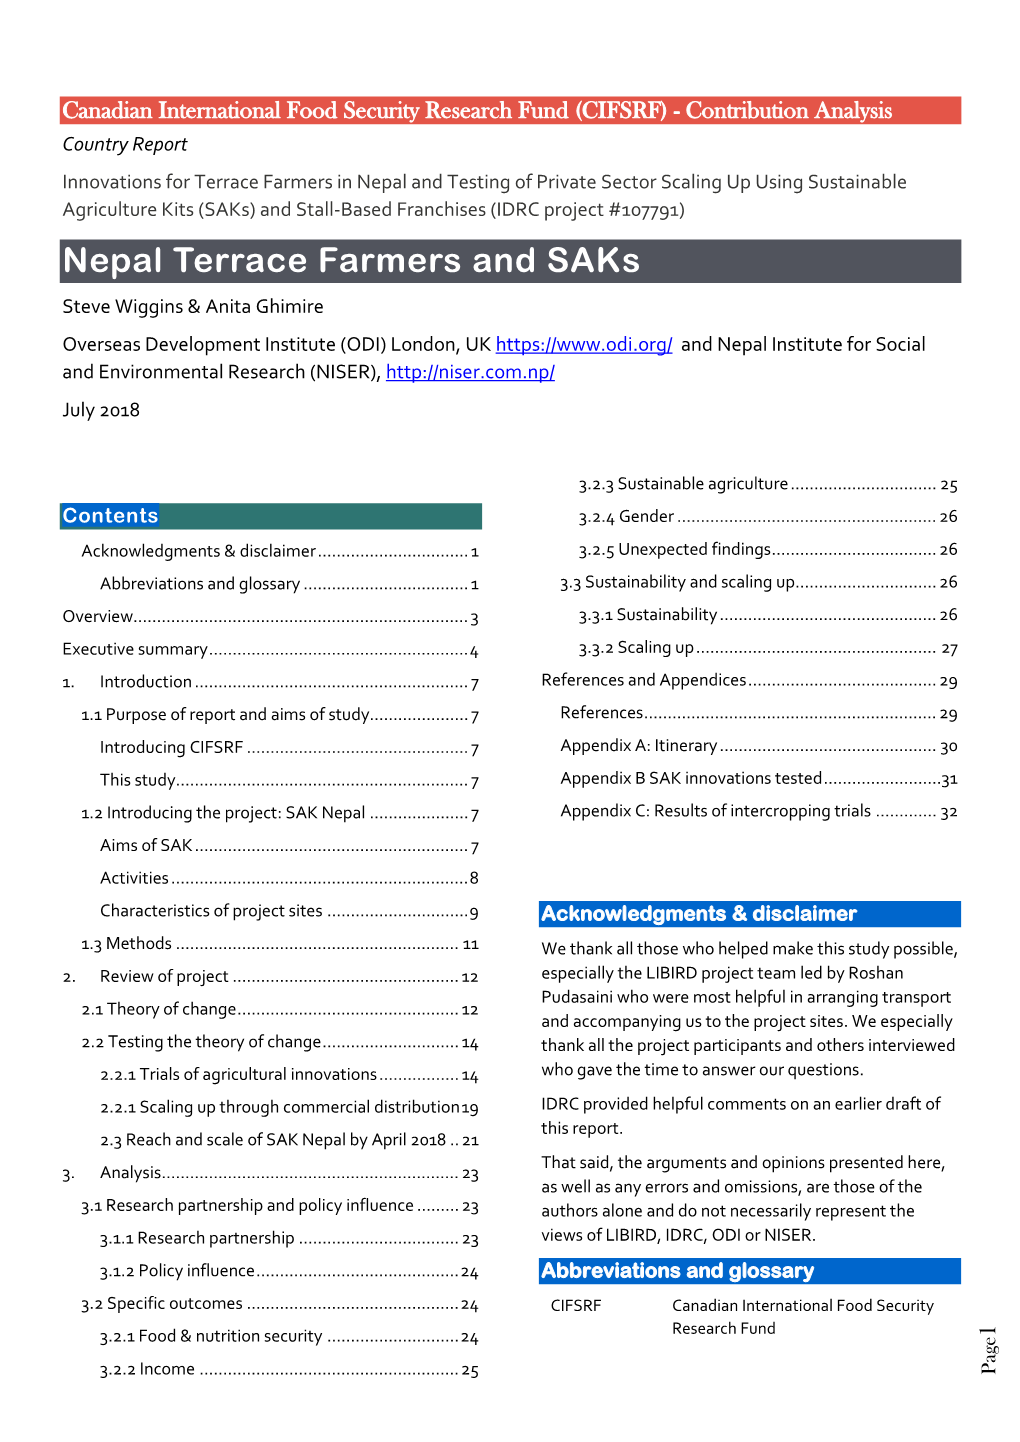 Nepal Terrace Farmers and Saks